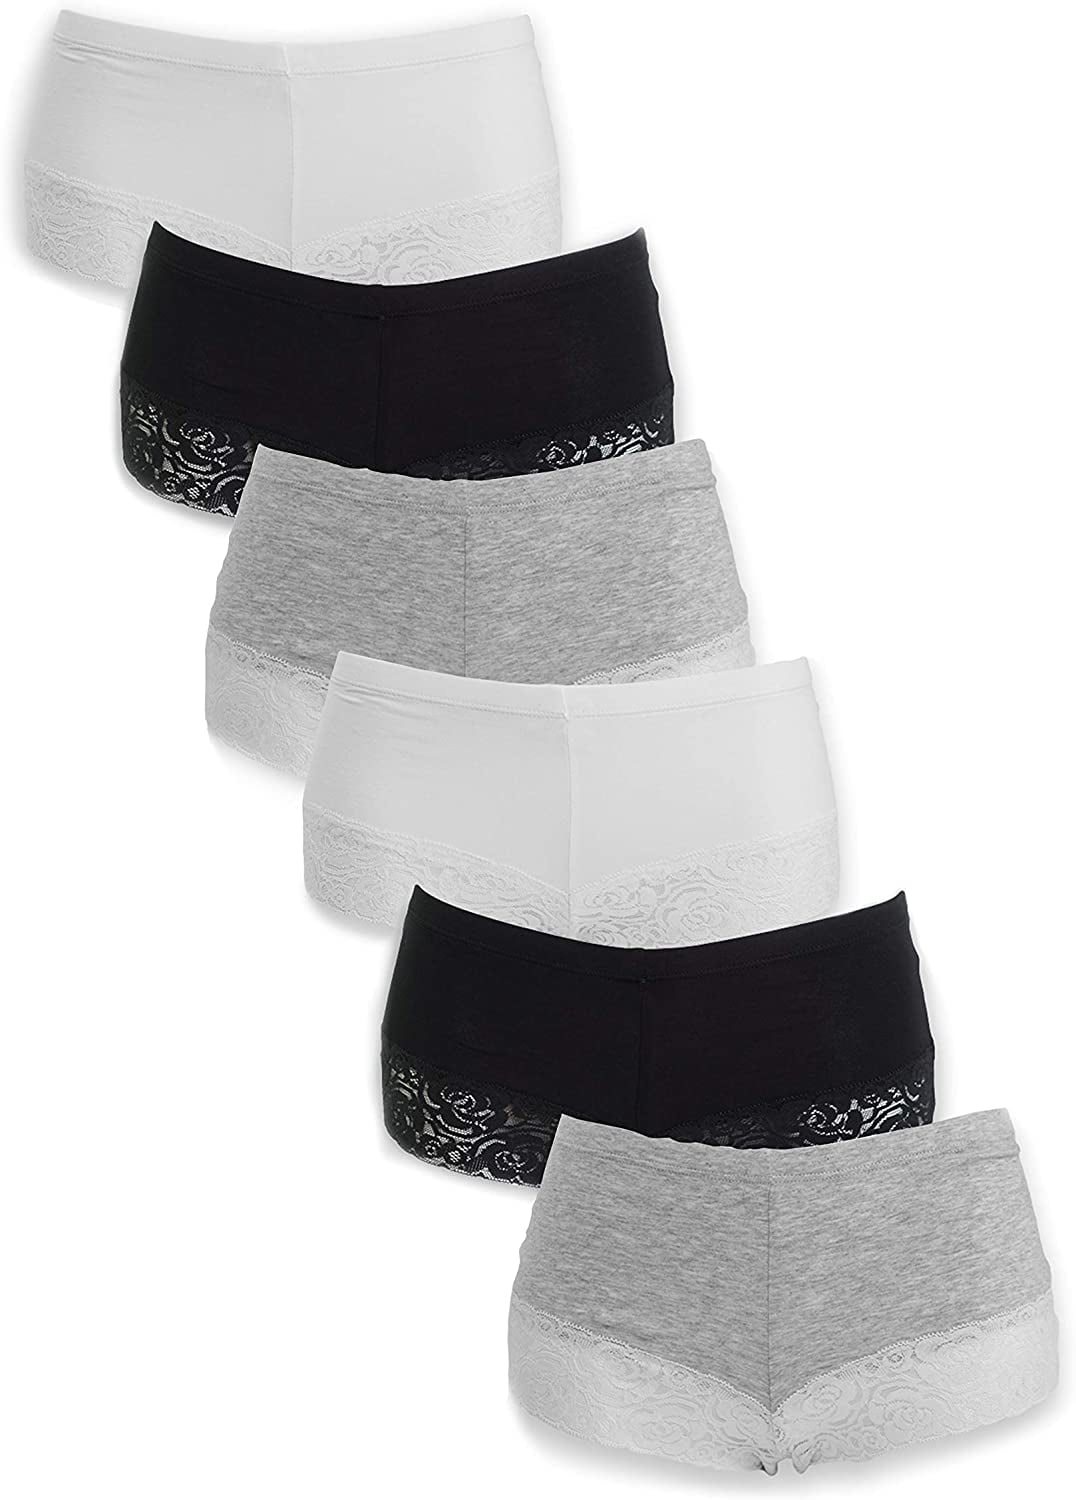 BOYSHORTS SHORTIE SHORT Sports 6 OR 12 Panties Undies 95% COTTON Gifts 8413 S-XL 